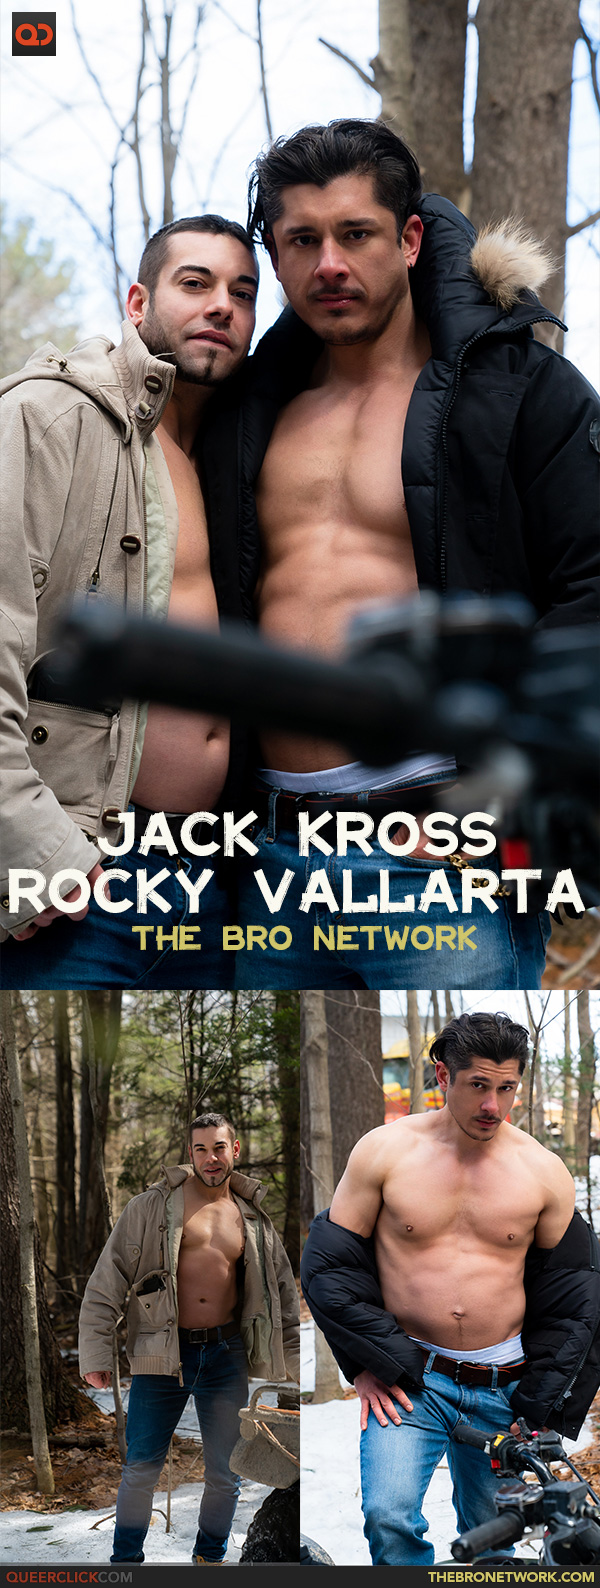 The Bro Network: Jack Kross and Rocky Vallarta